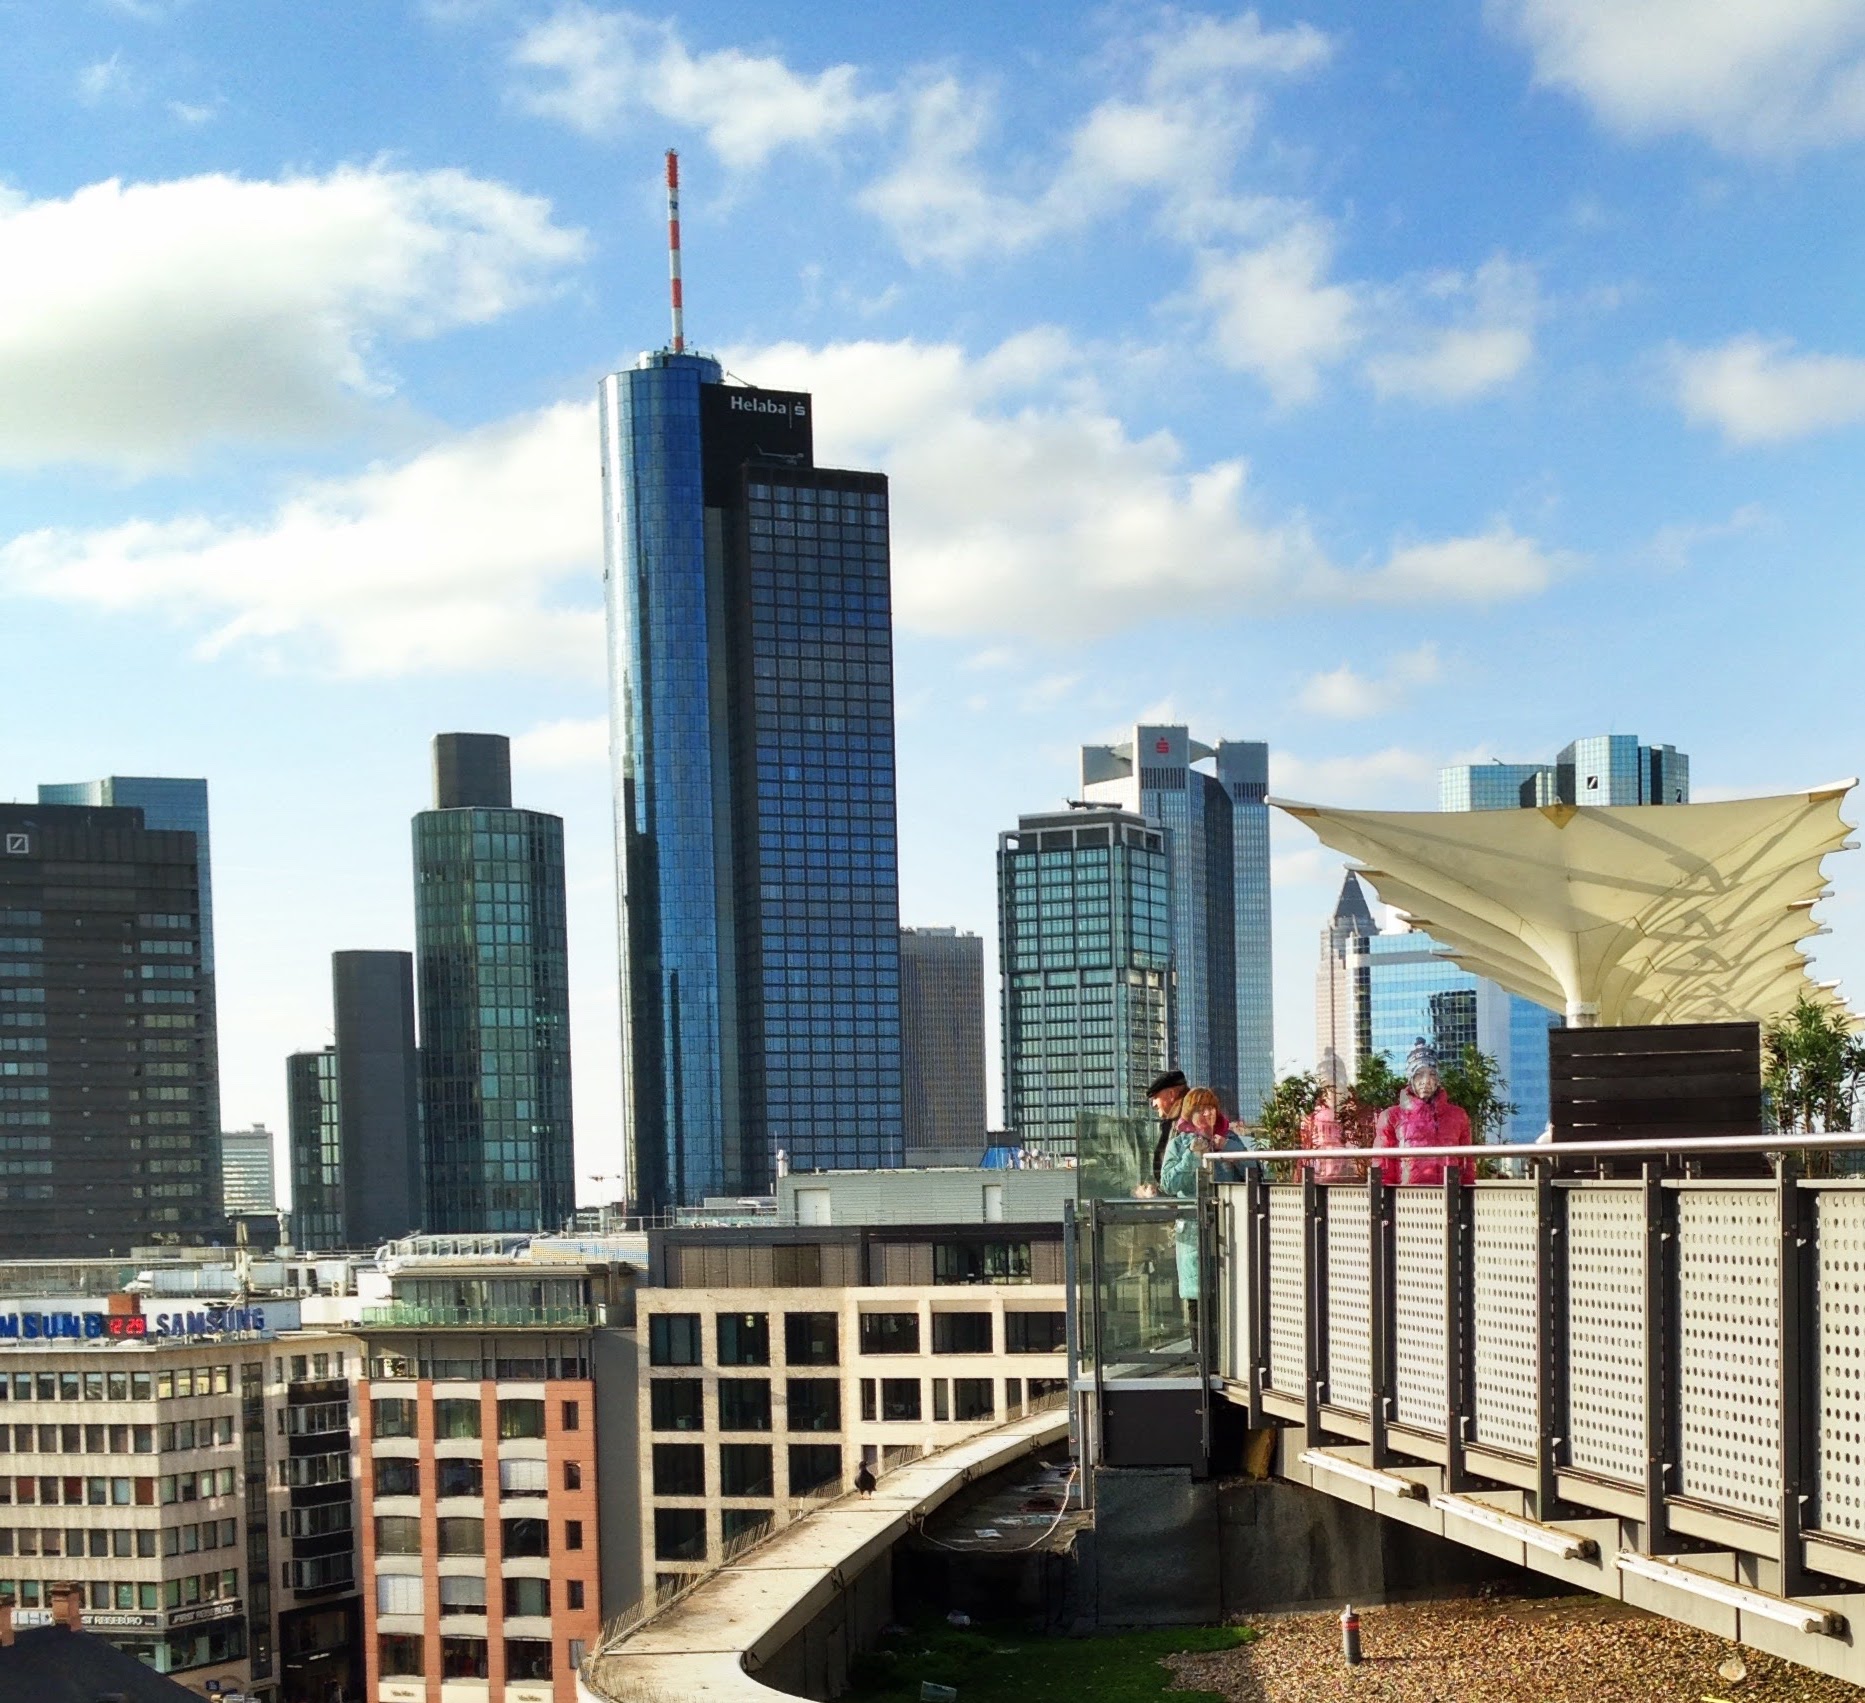  The skyline of Frankfurt, Germany 